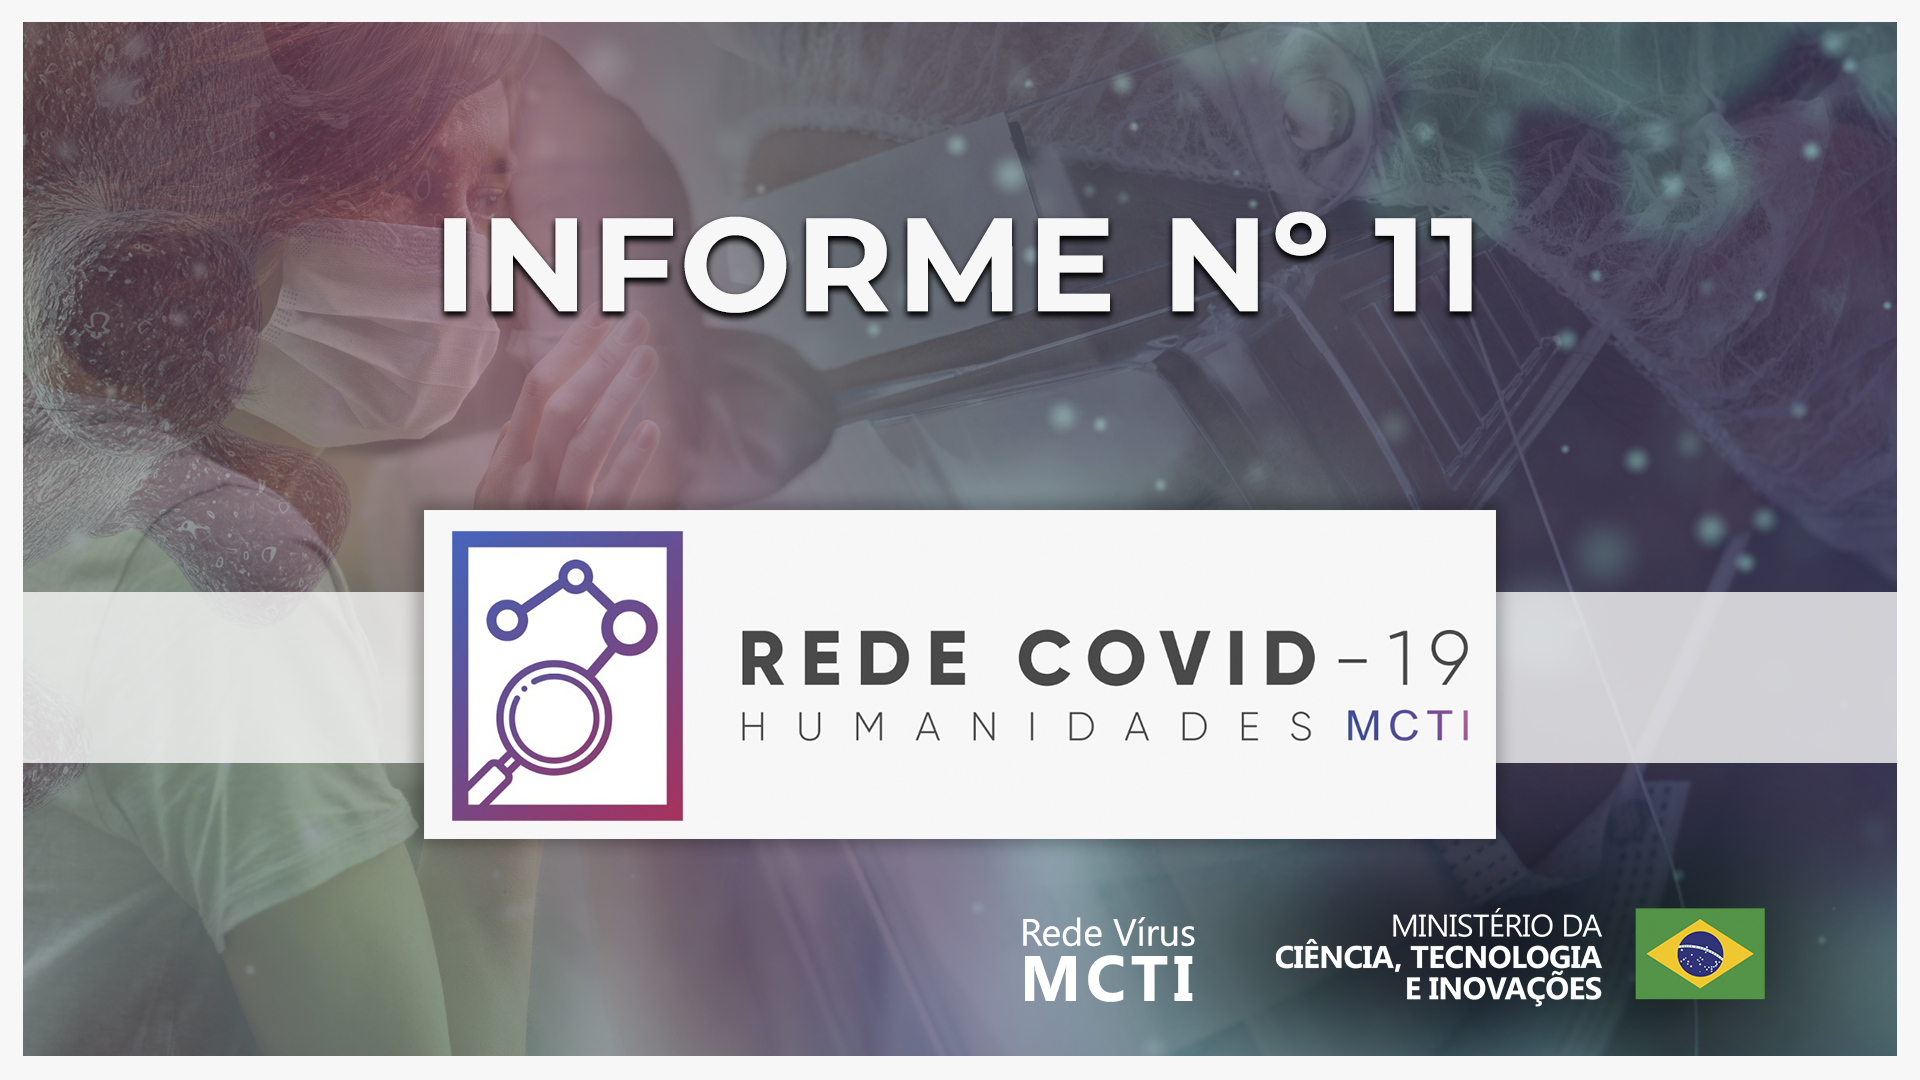 INFORME Nº 11 – REDE COVID-19 HUMANIDADES MCTI